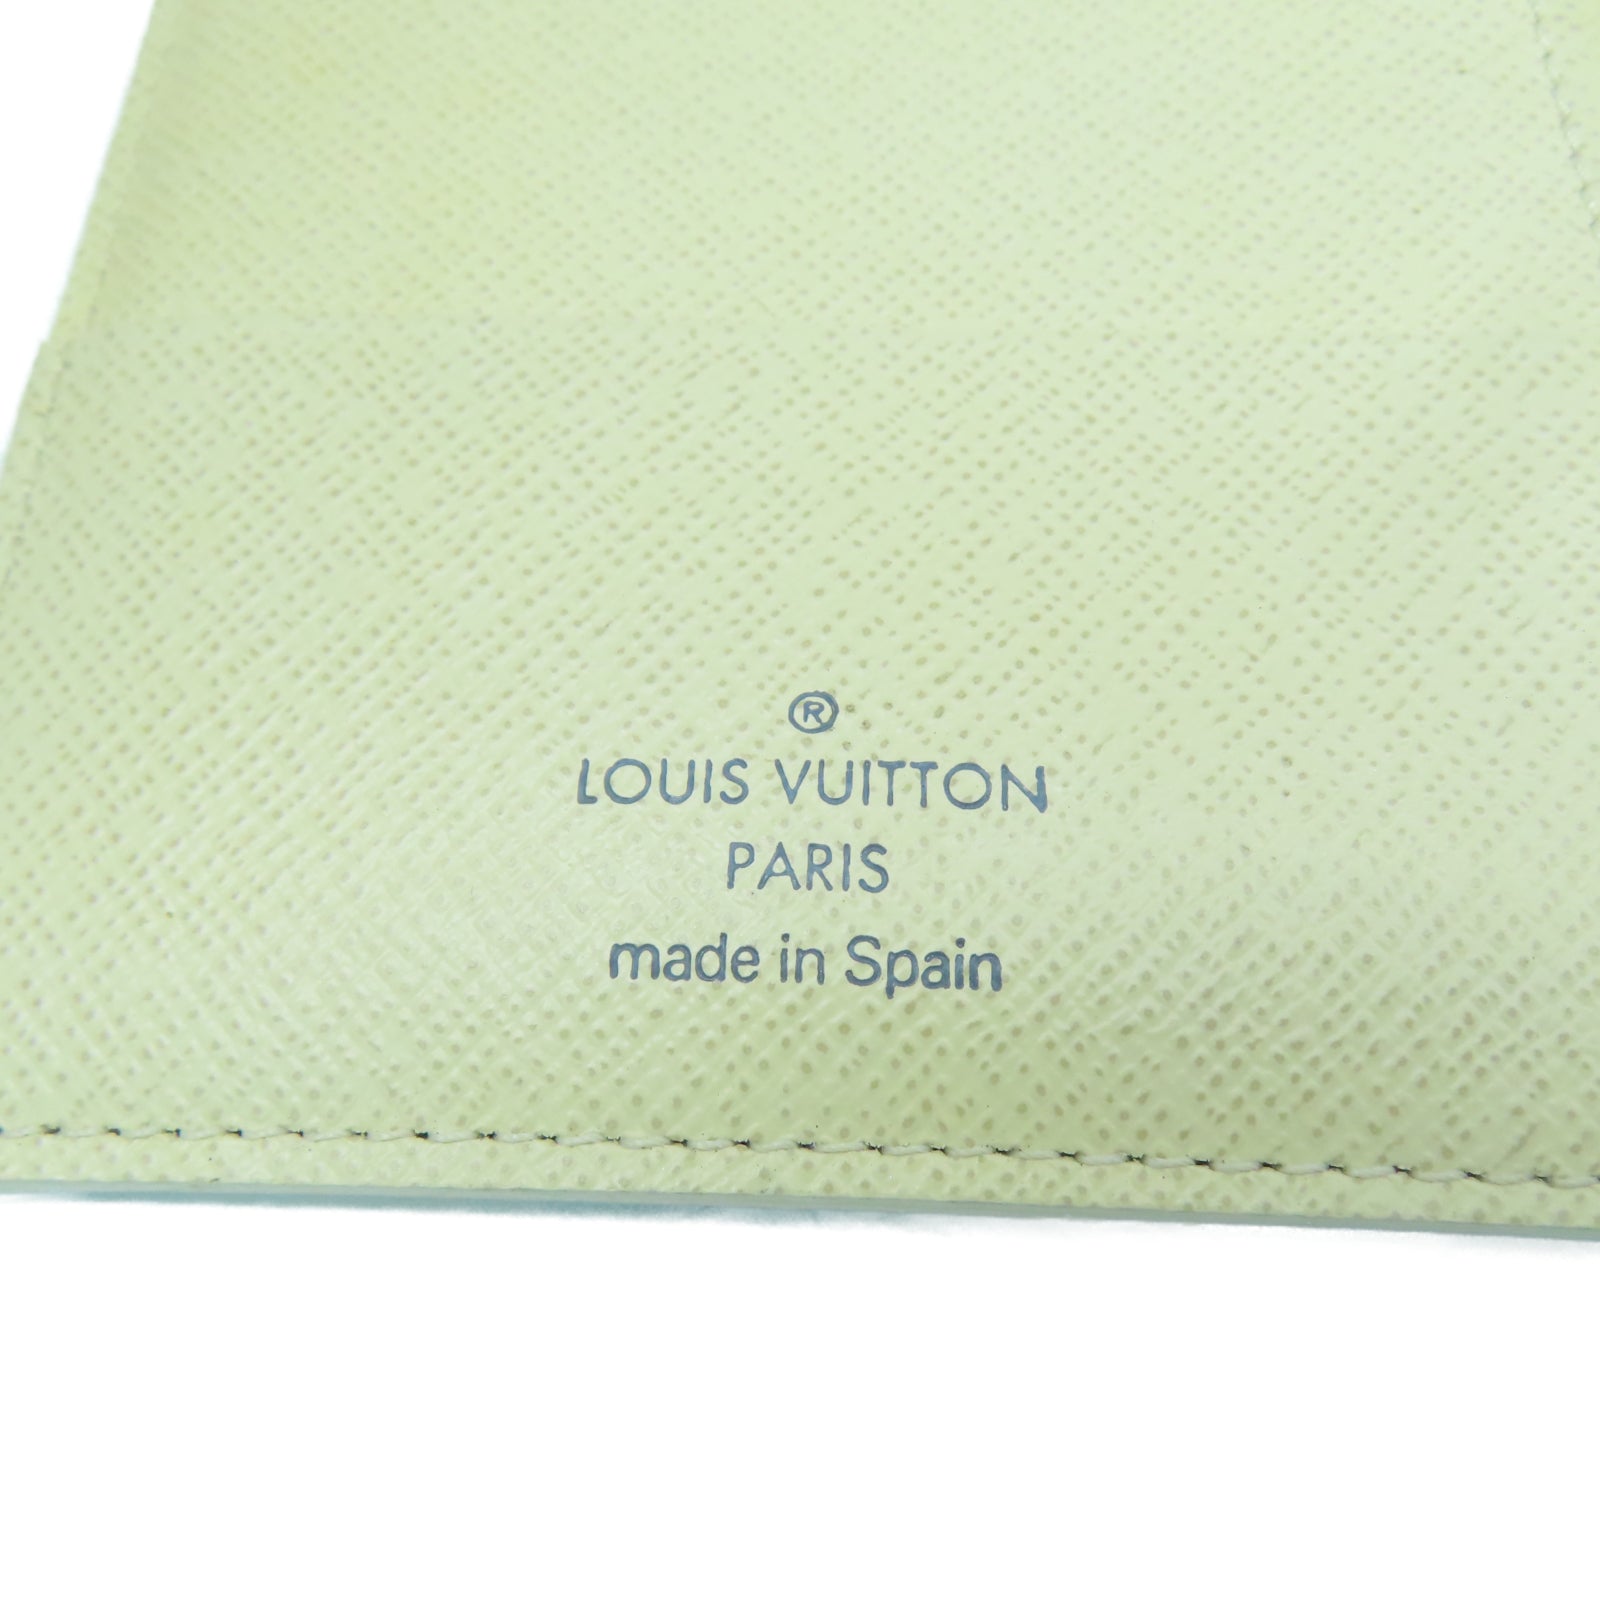 LOUIS VUITTON Damier Azur Passport Cover 195439